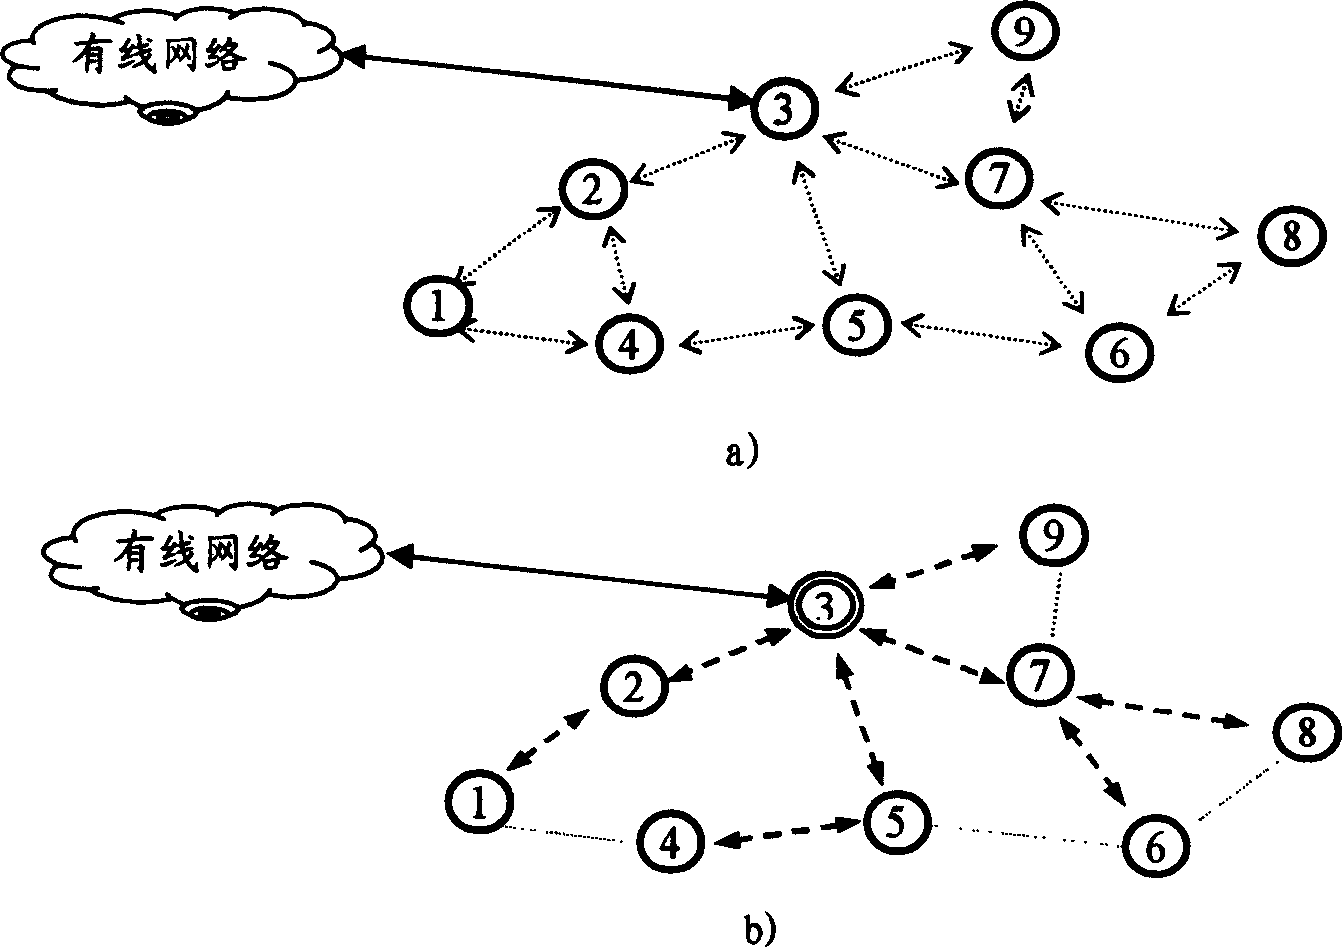 Nucleus tree self-organizing dynamic route algorithm